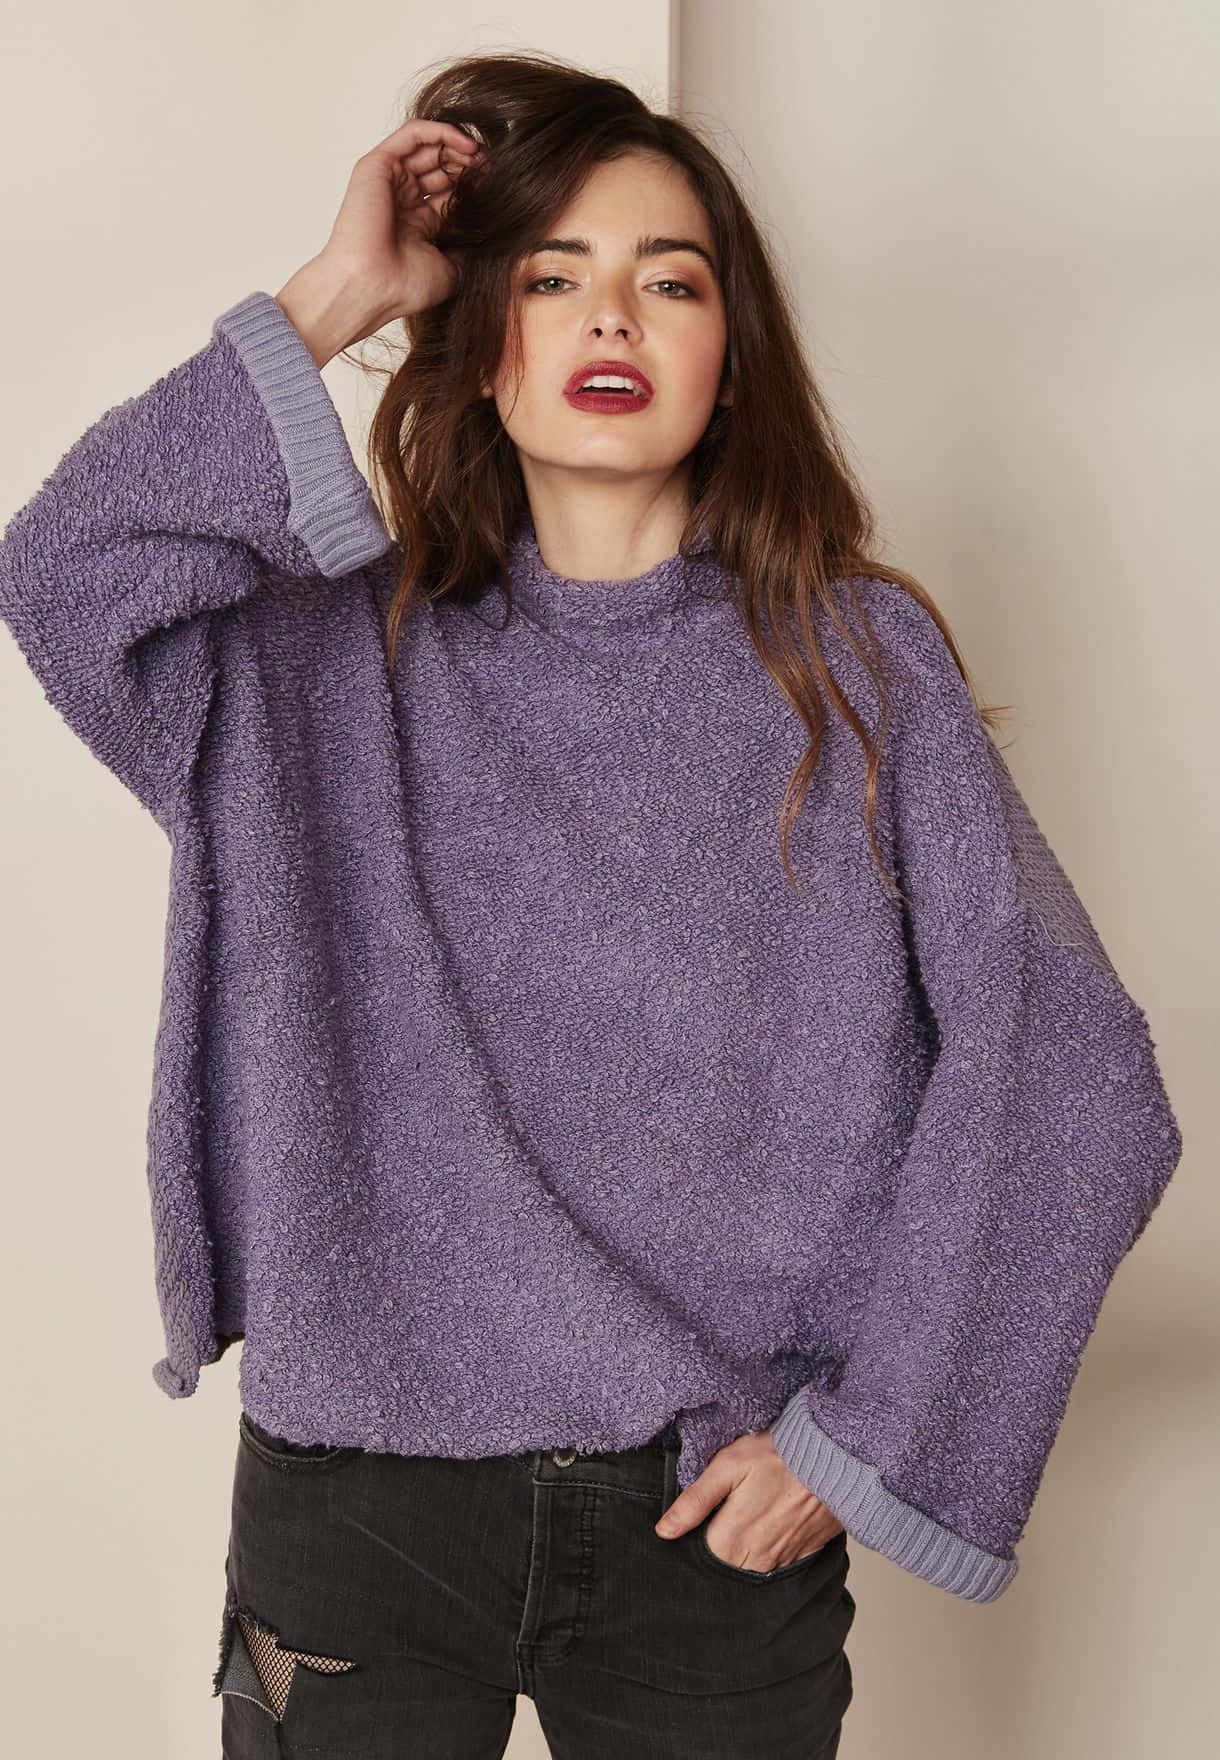 A Stylish Purple Sweatshirt Wallpaper